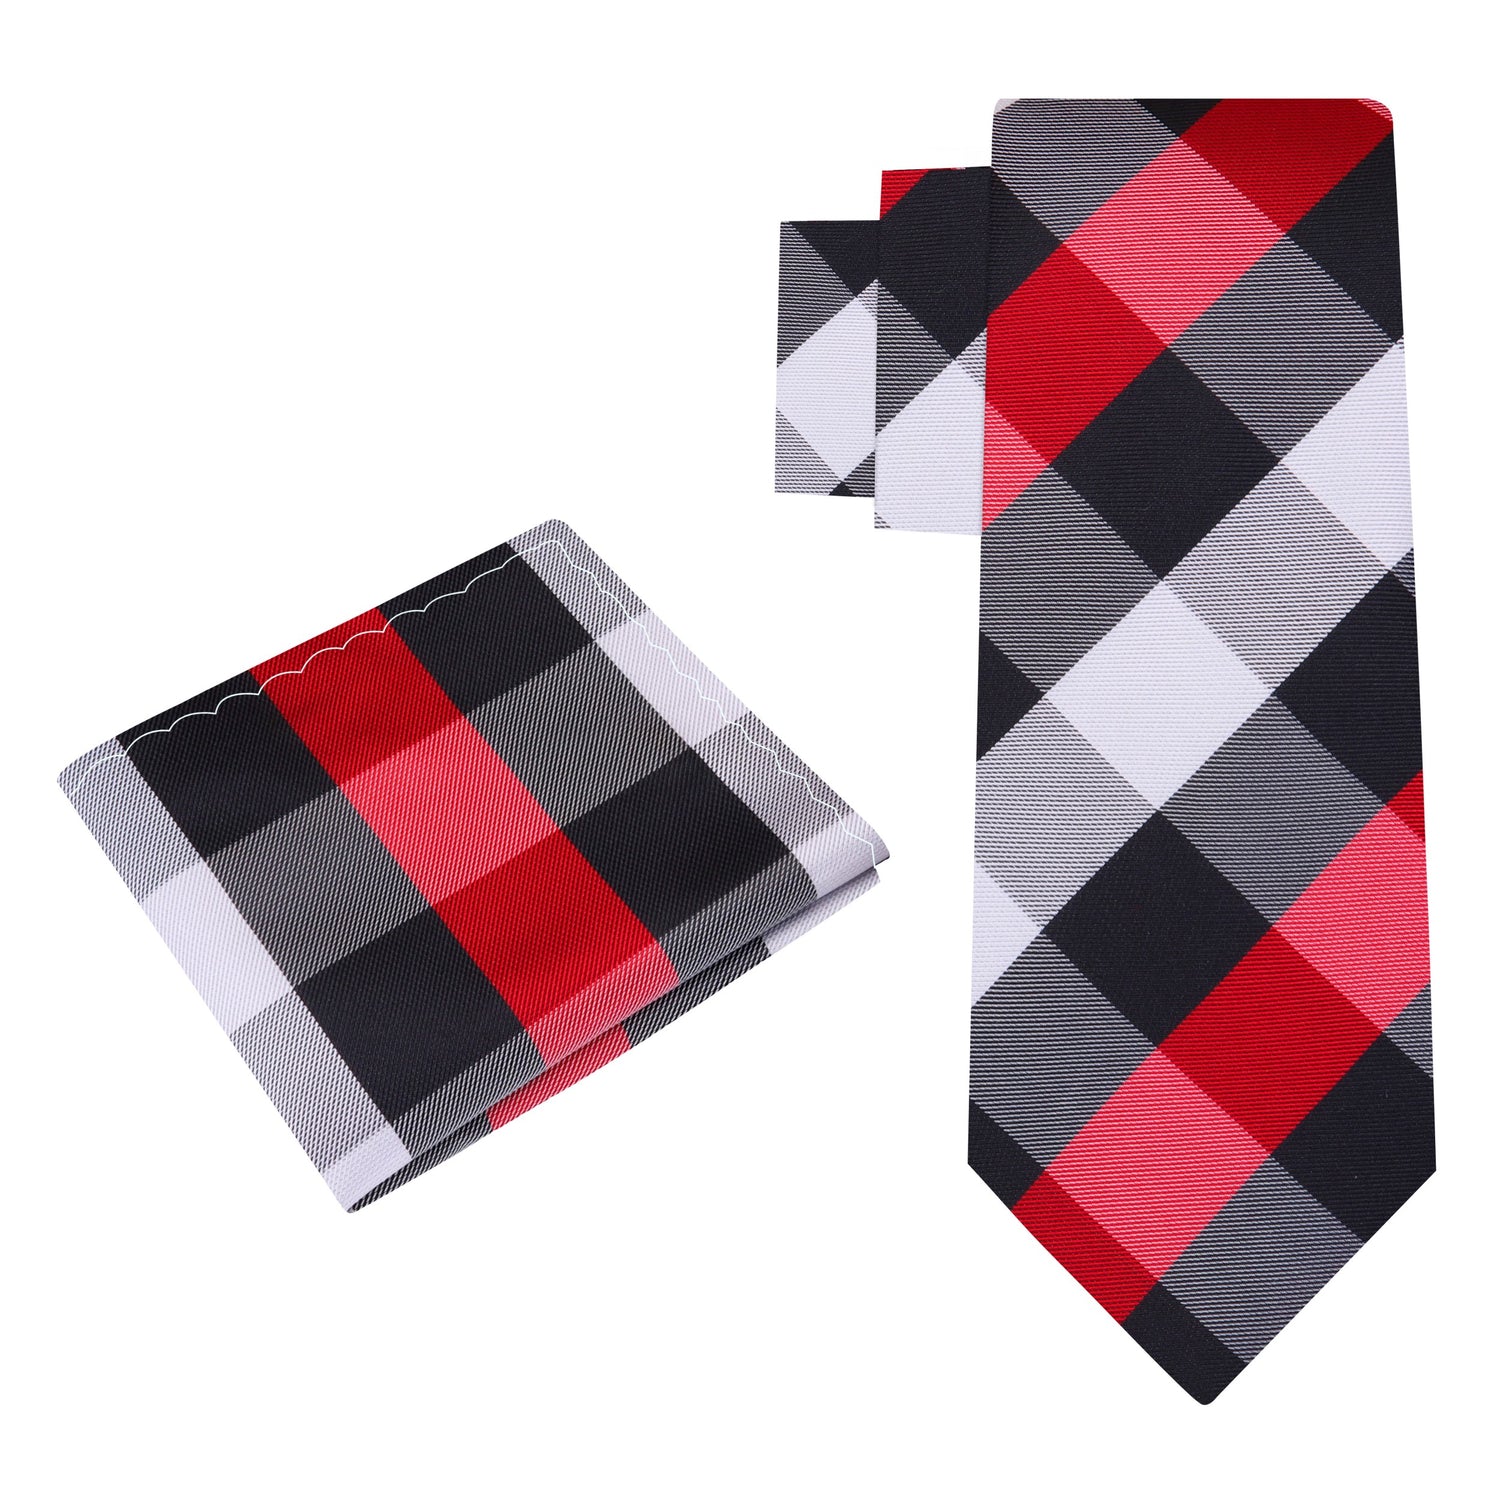 Alt View: A Red, Black, Grey Plaid Pattern Silk Necktie, Matching Pocket Square